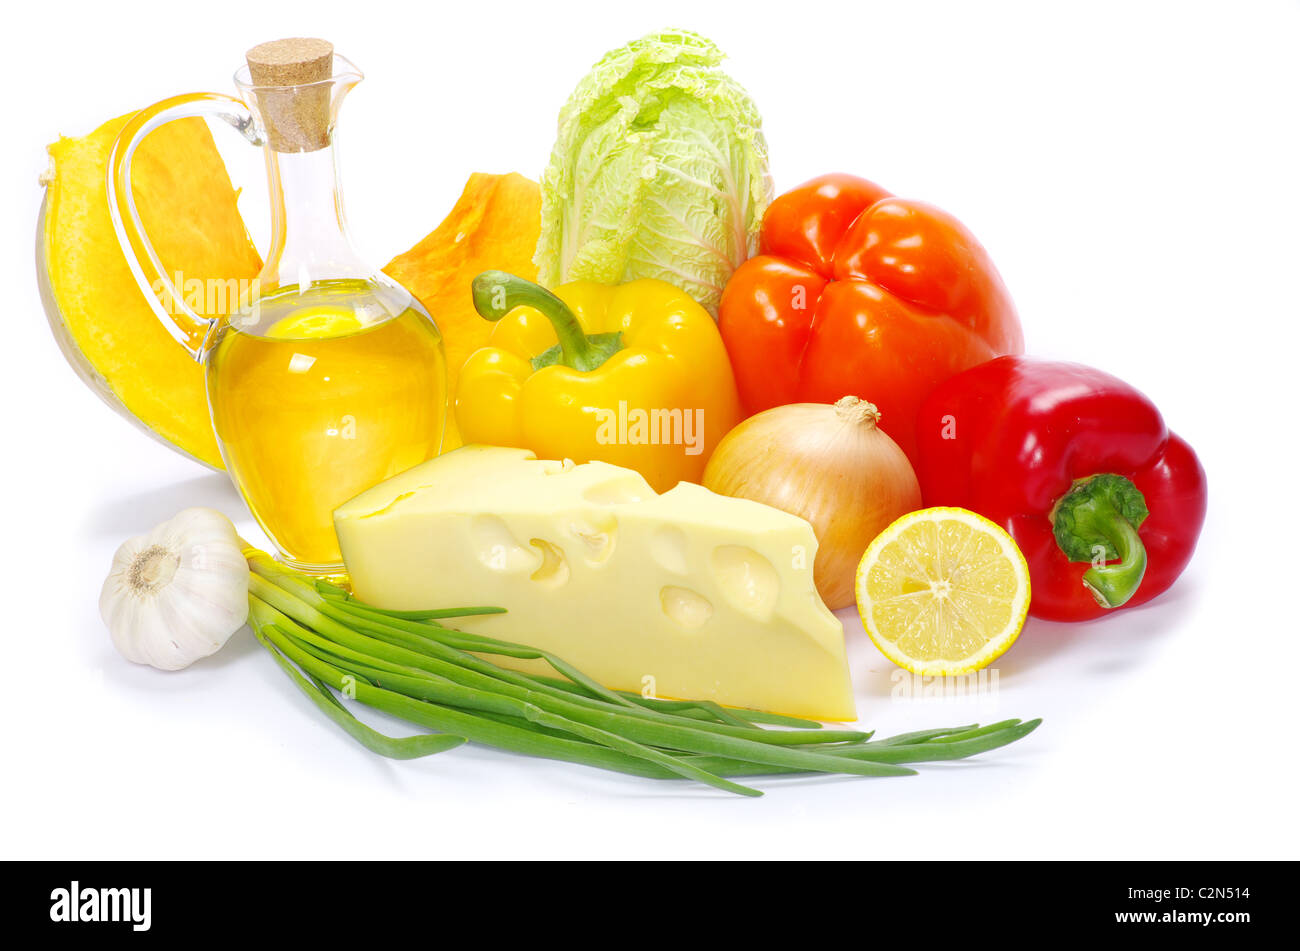 vegetable isolated on white background Stock Photo